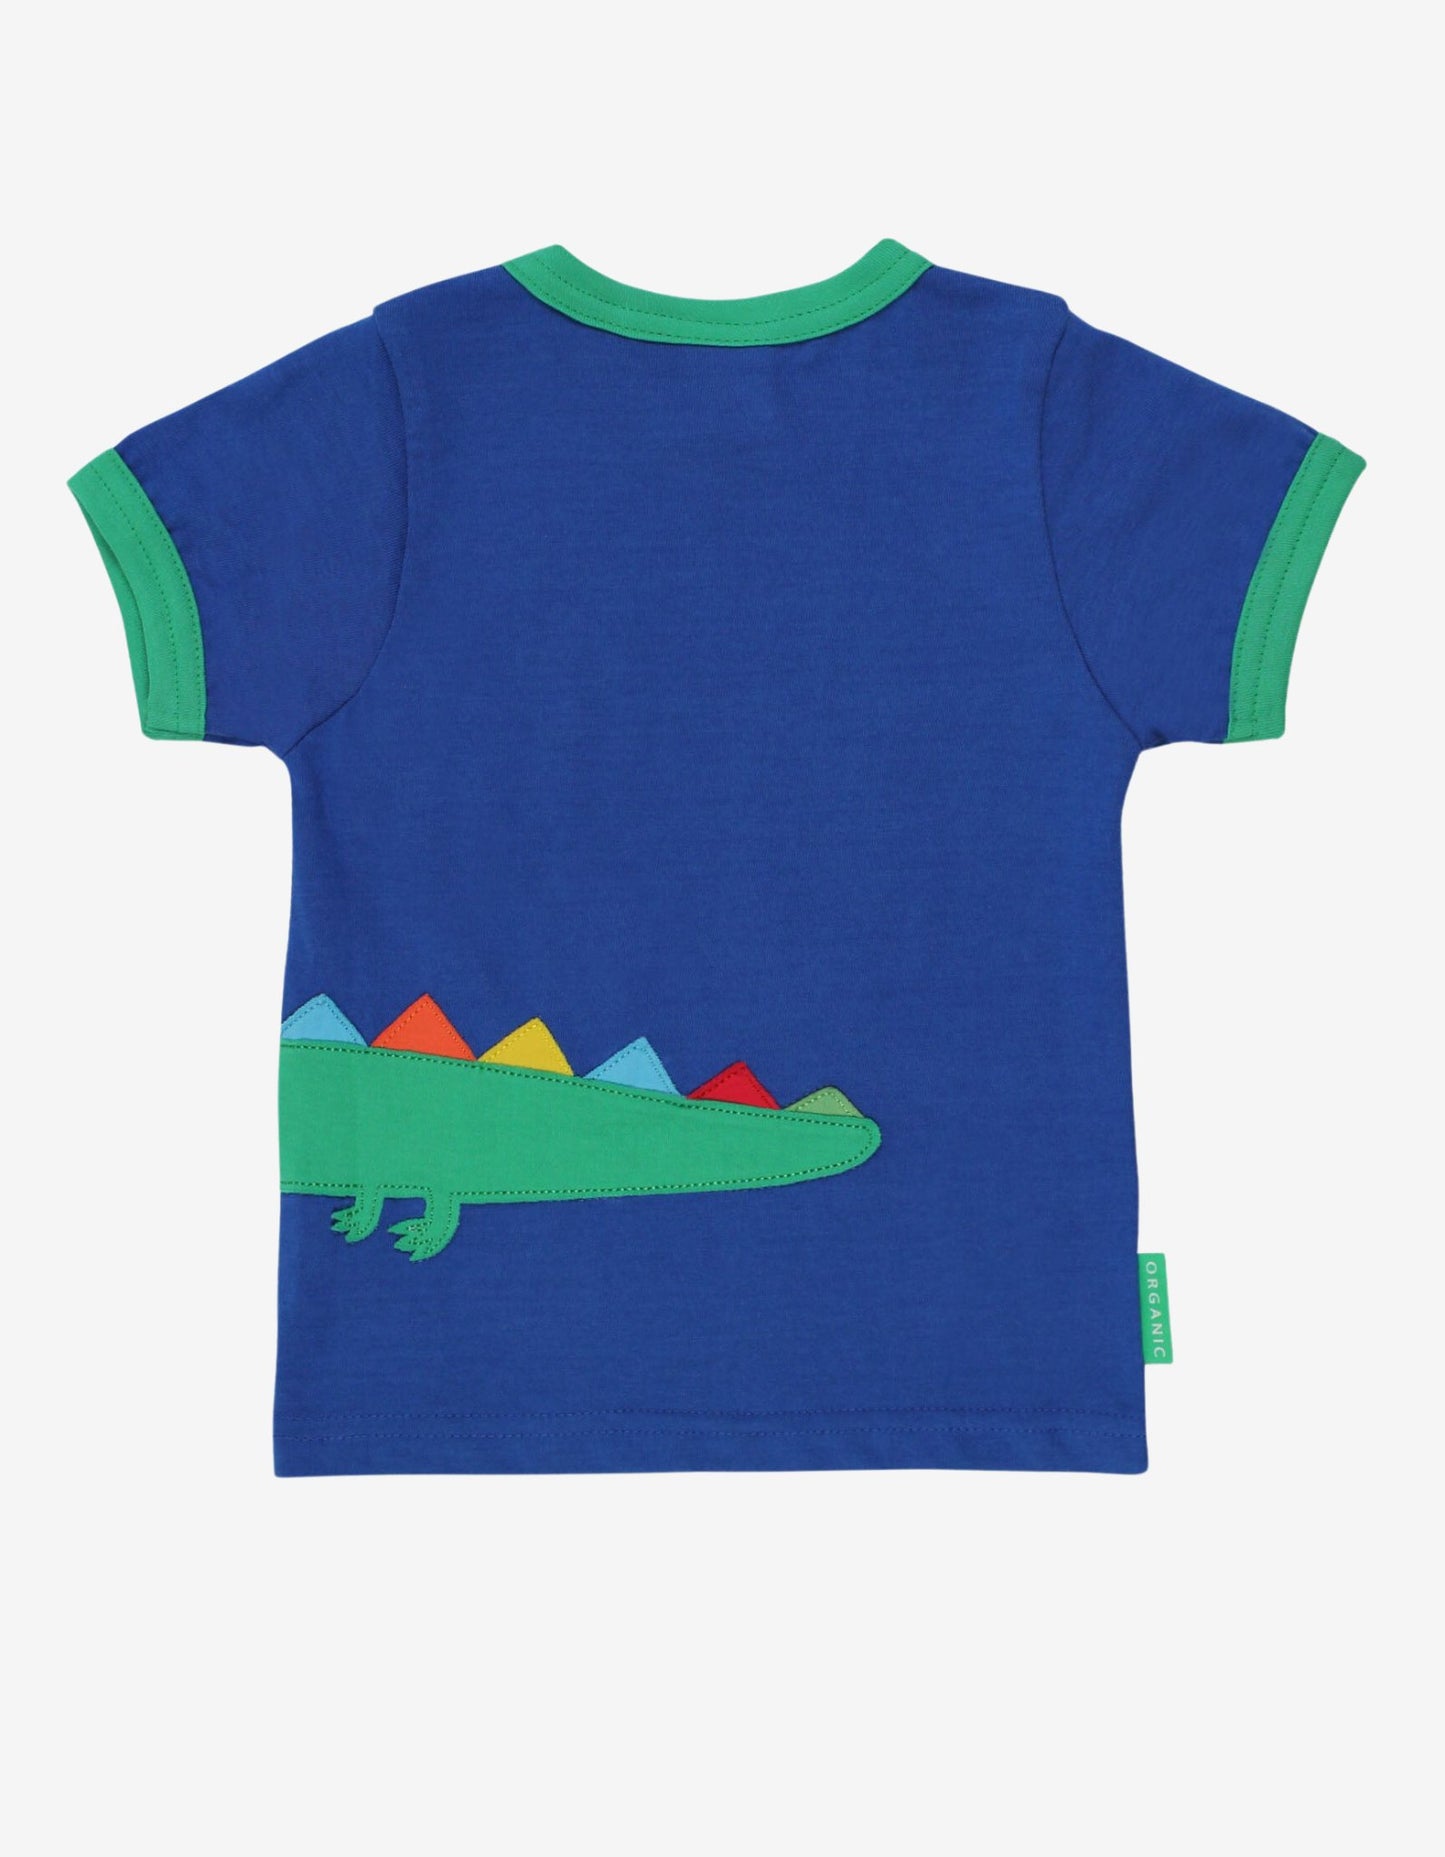 Organic Crocodile Applique T-Shirt - Toby Tiger